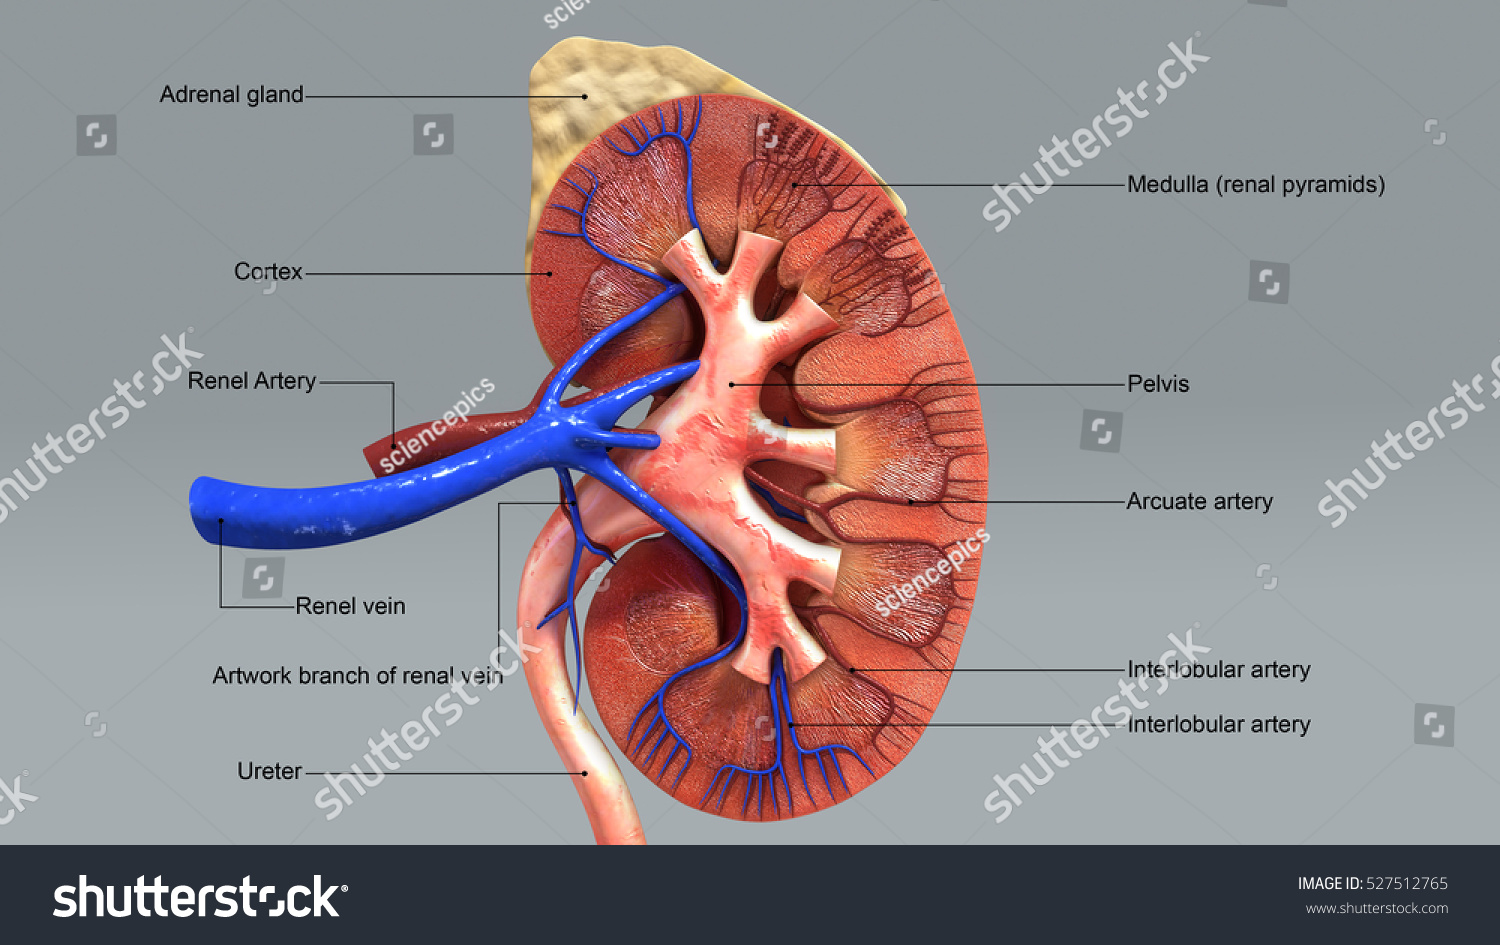 Kidney Anatomy 3d Illustration - 527512765 : Shutterstock